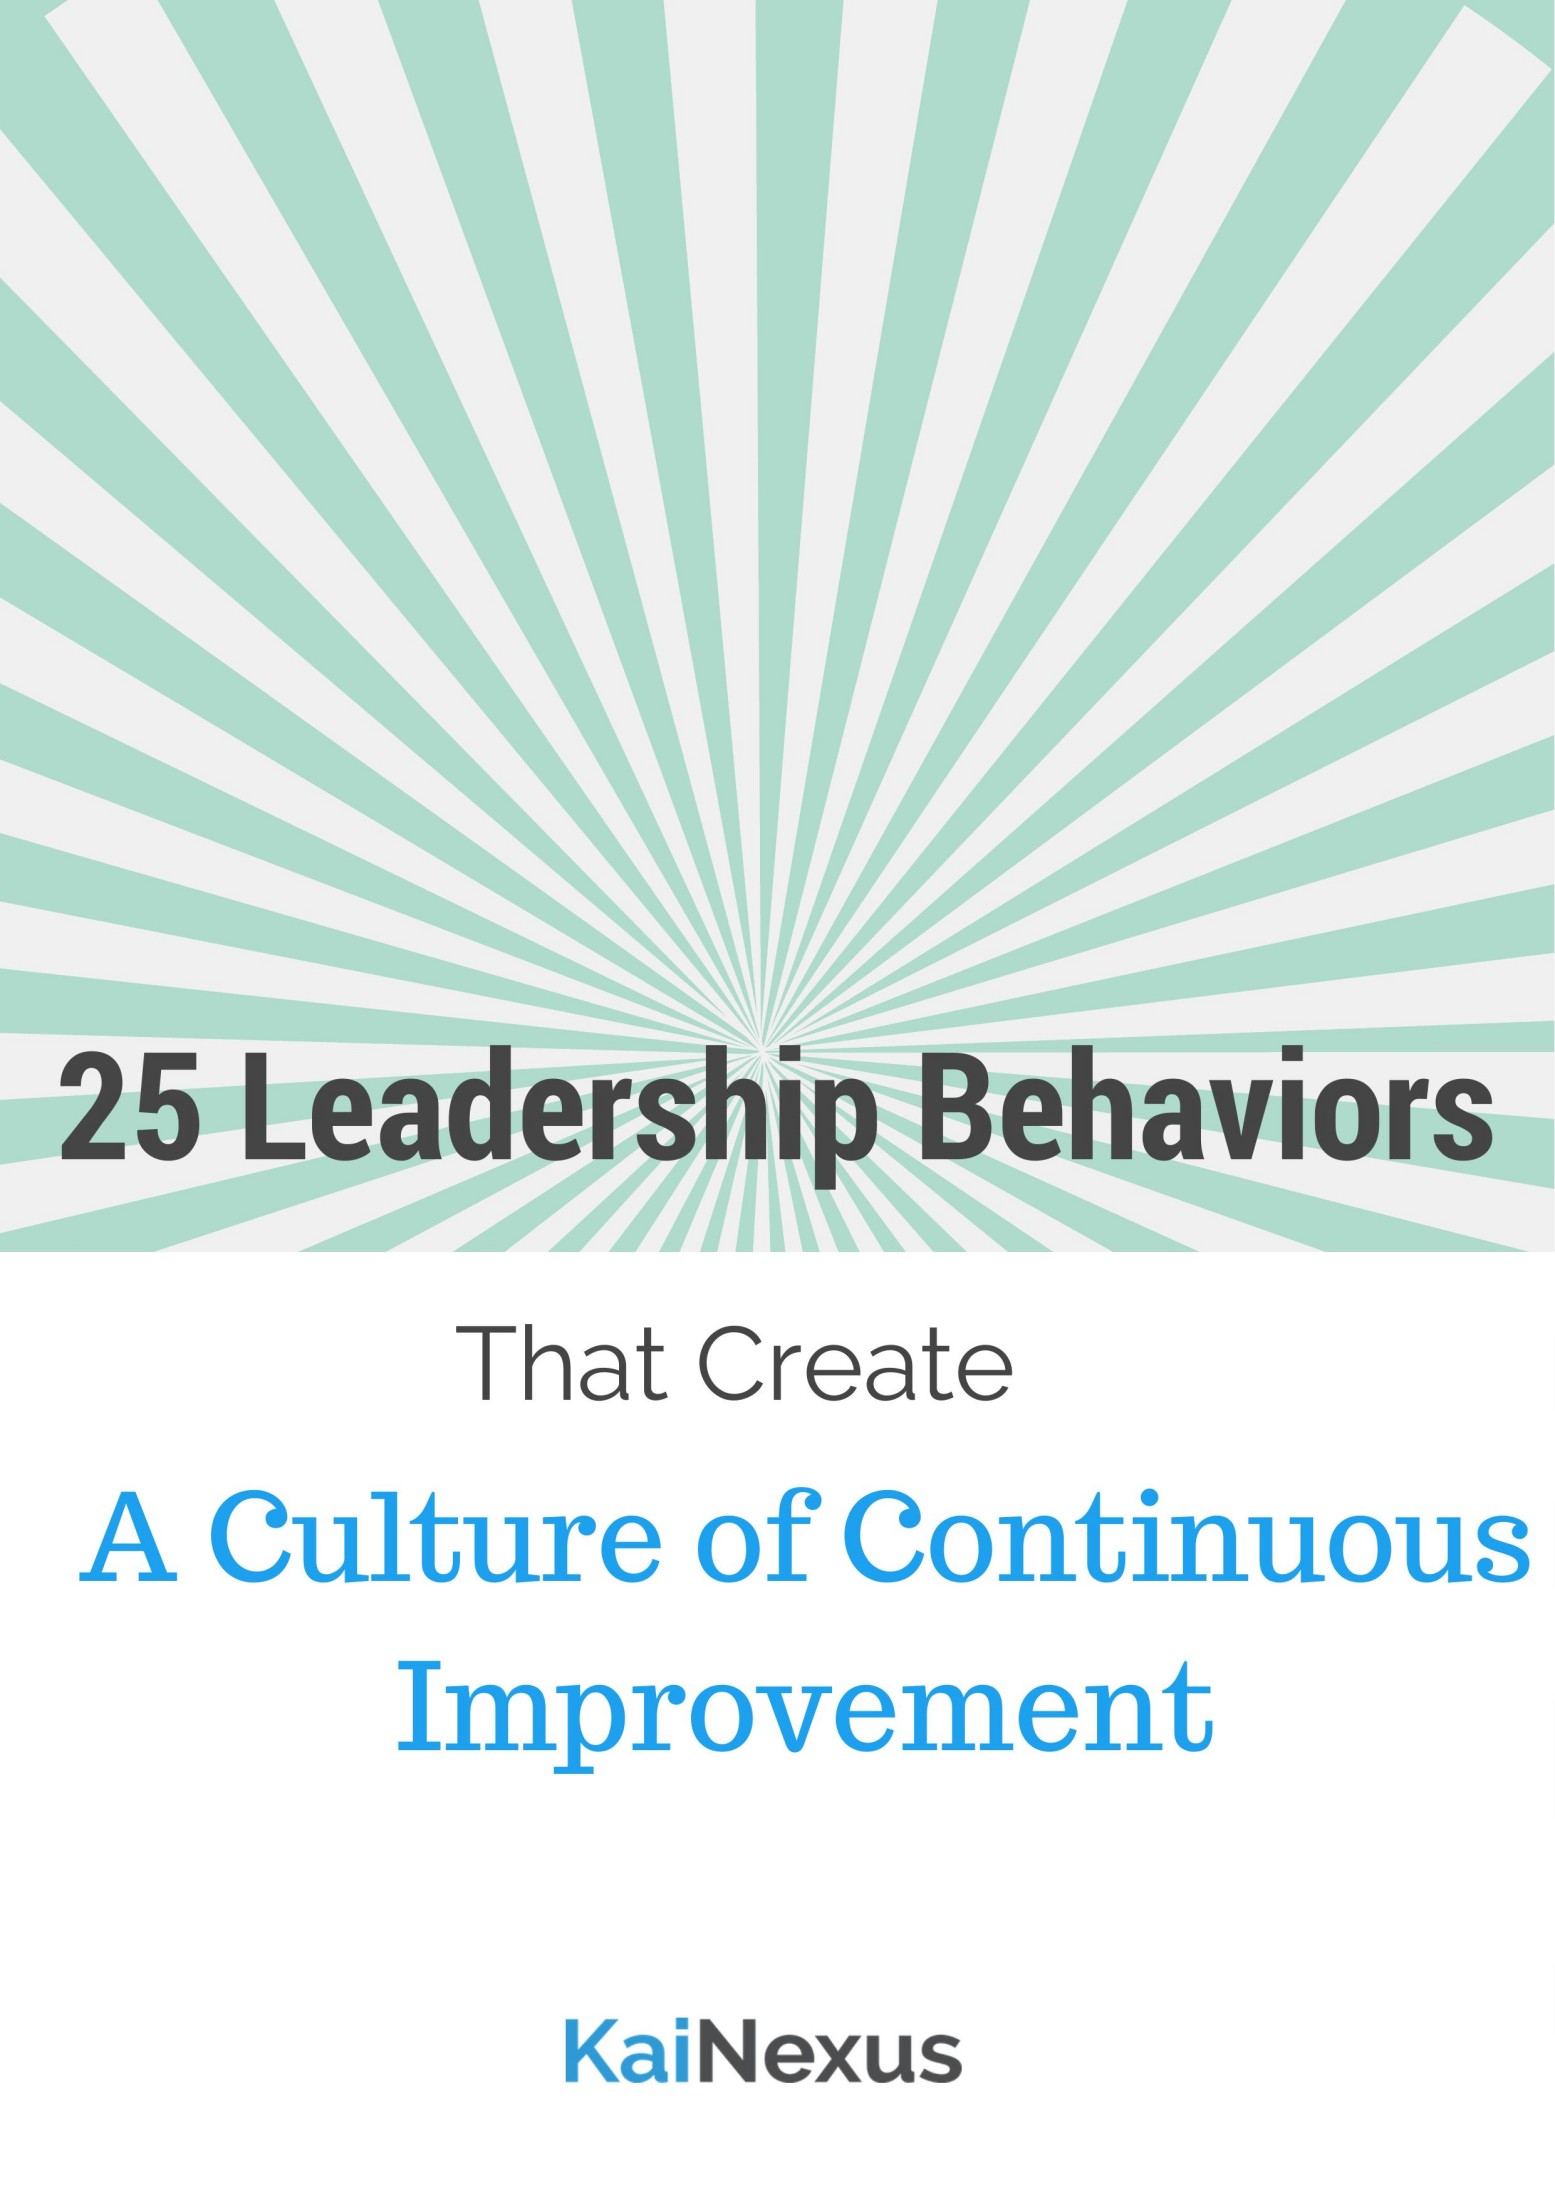 25 Leadership Behaviors That Create a Culture of Continuous Improvement